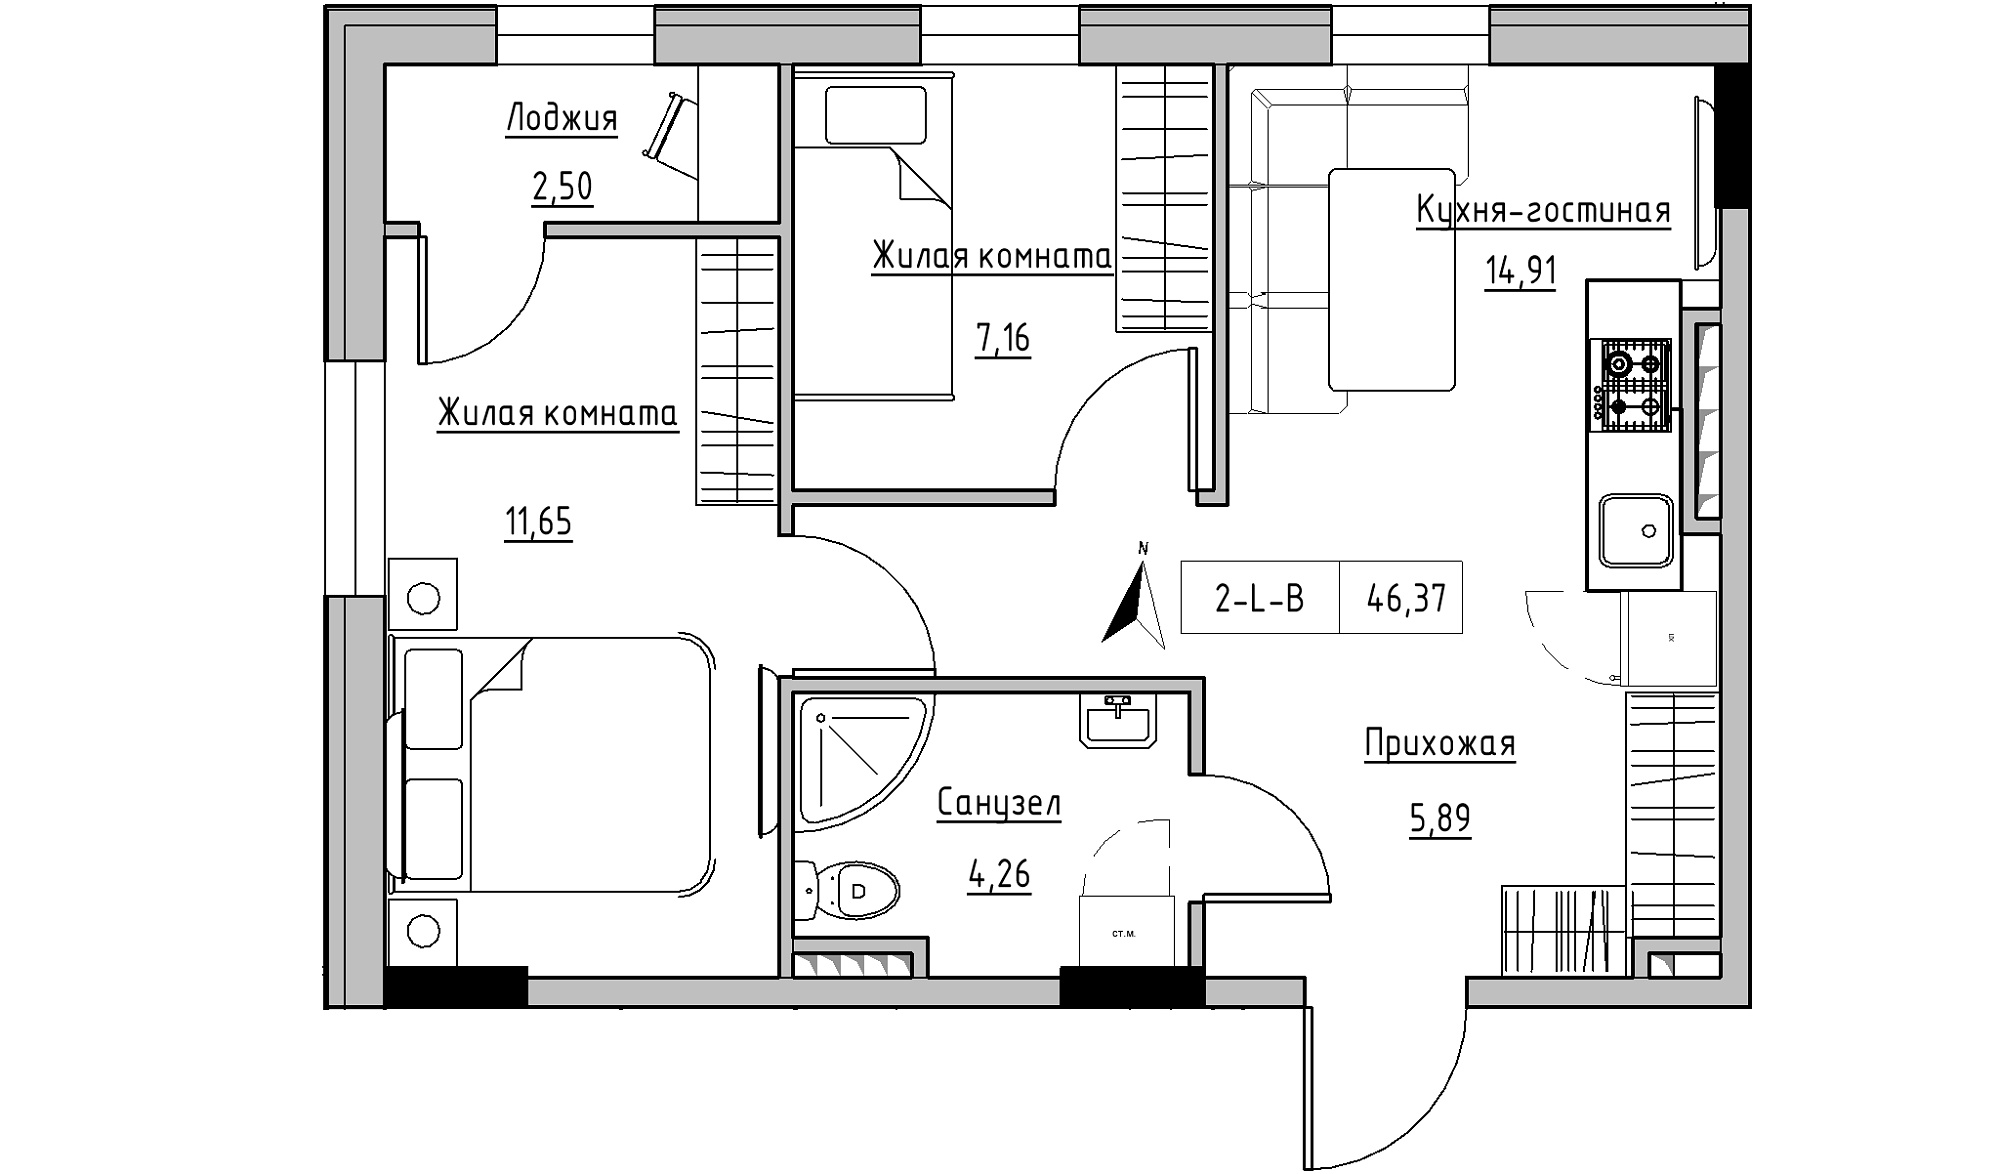 Planning 2-rm flats area 46.37m2, KS-025-04/0006.